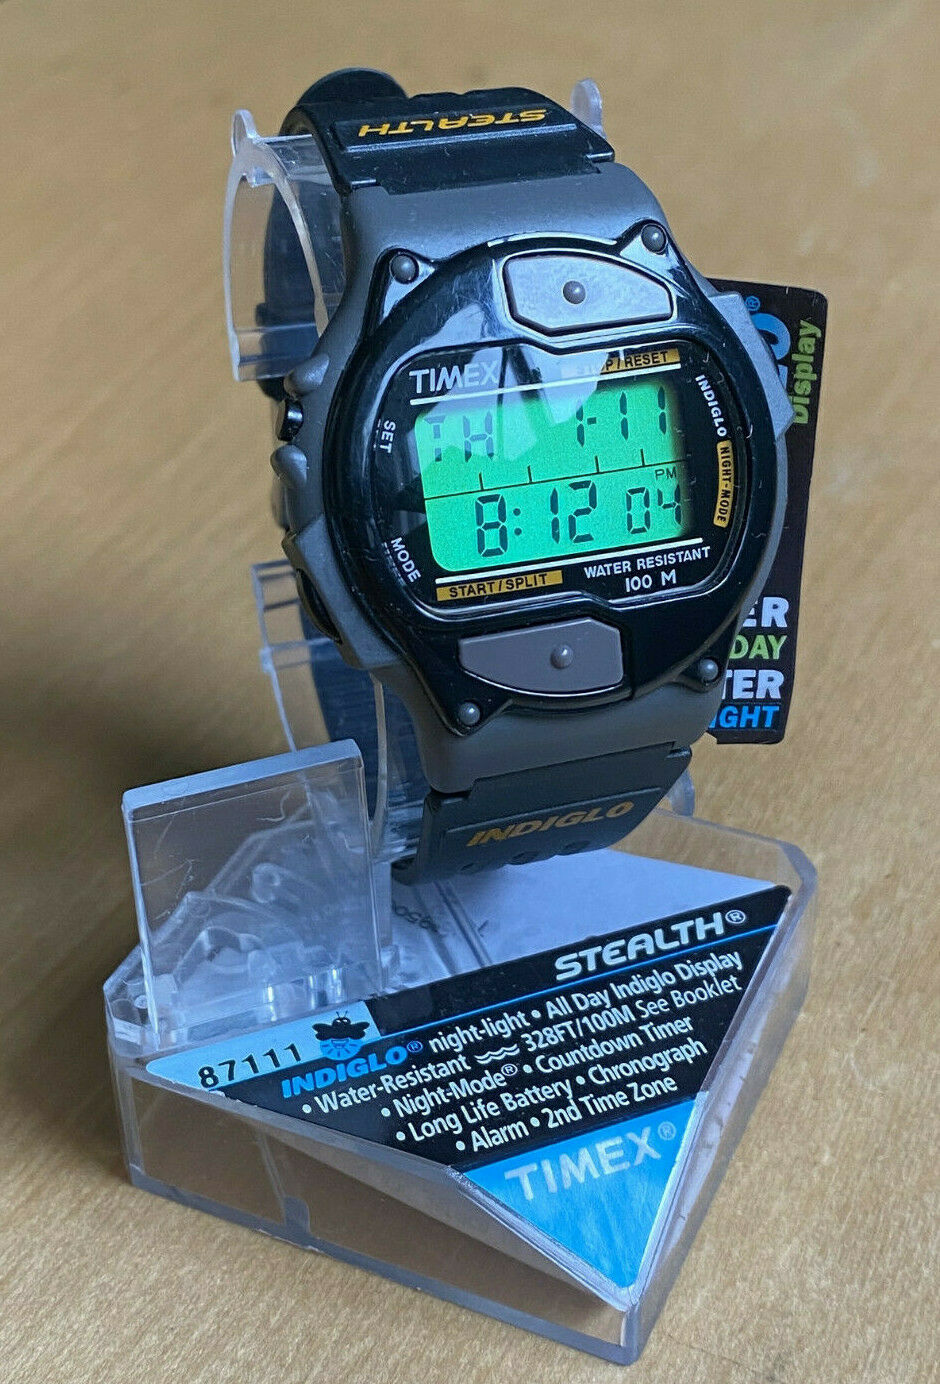 alarm chrono watch instructions digital